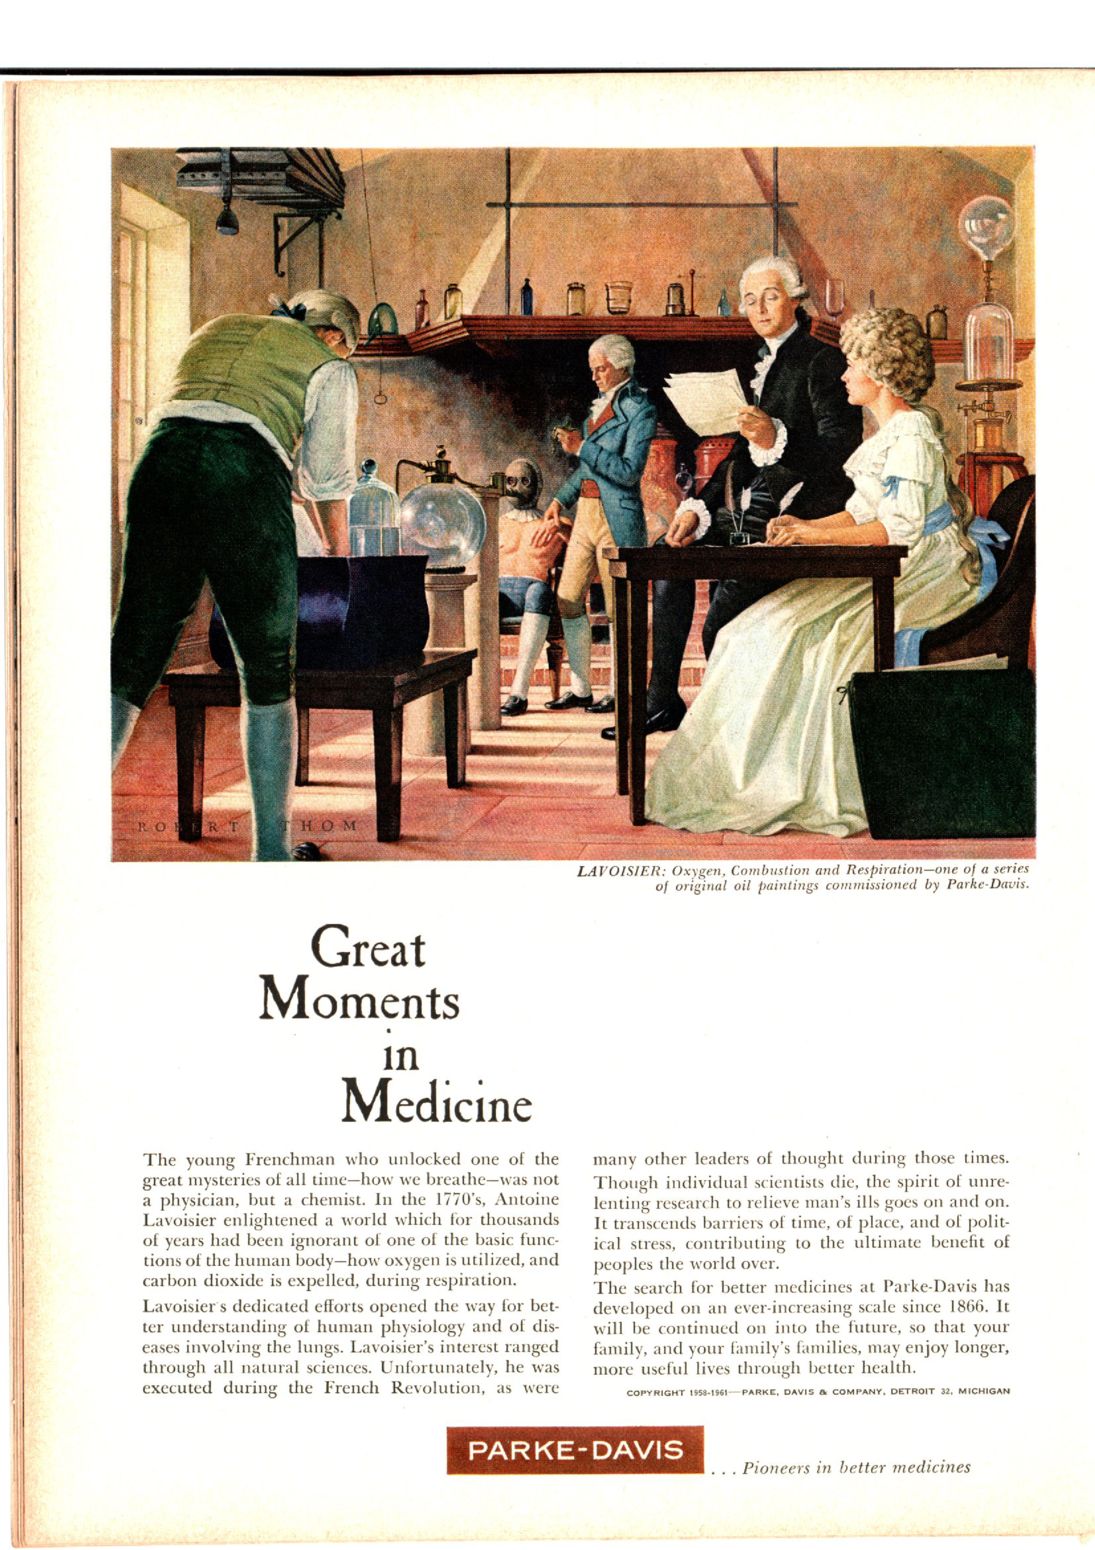 Great Moments in Medicine by Parke-Davis,1961.jpg